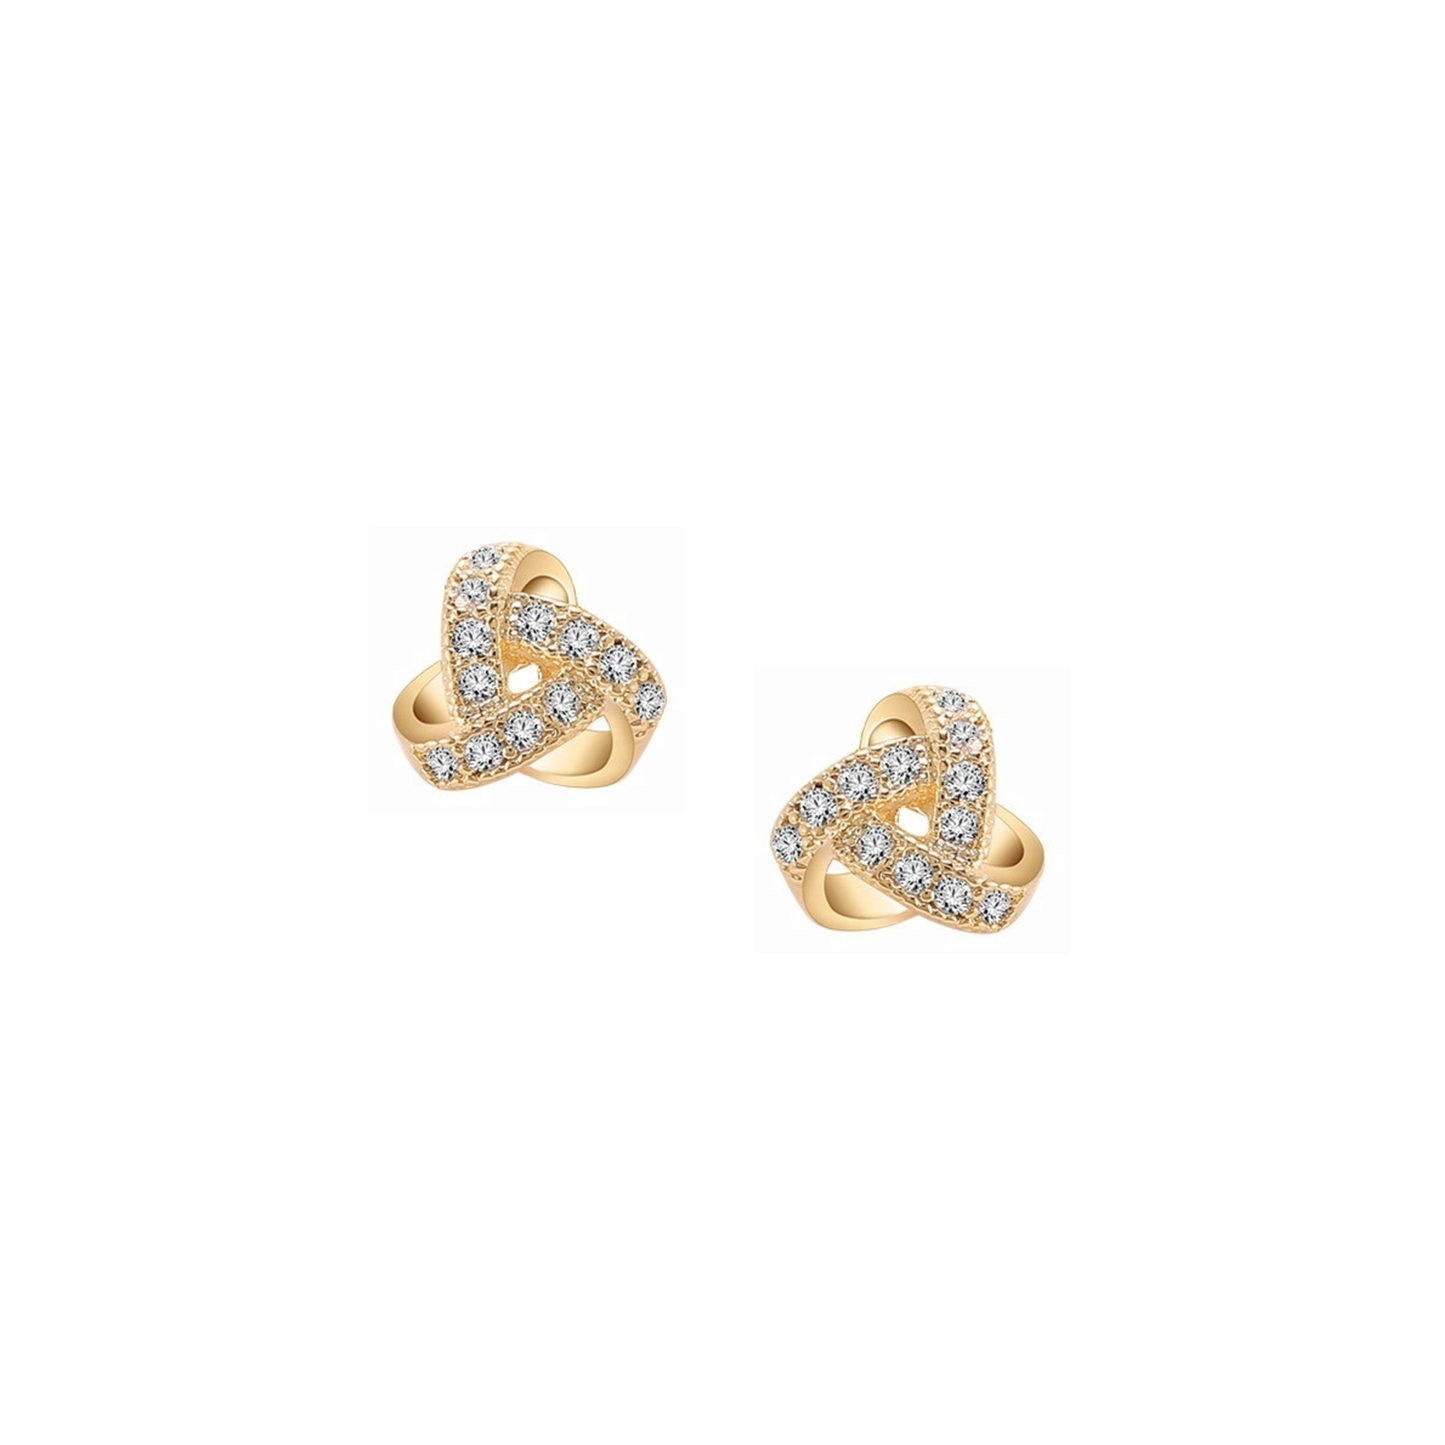 trinity knot earrings gold